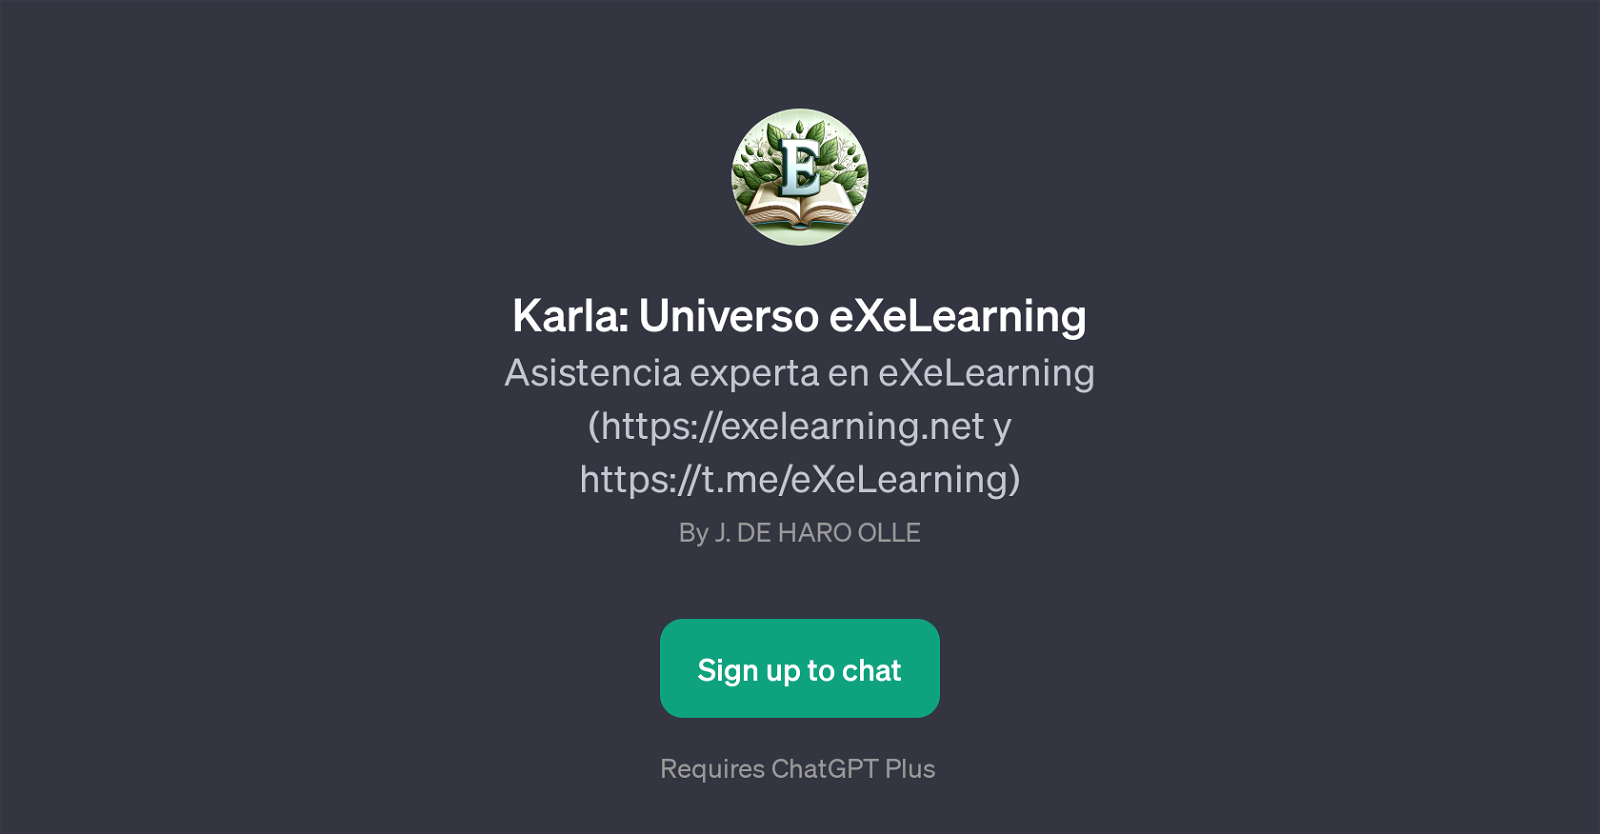 Karla: Universo eXeLearning website